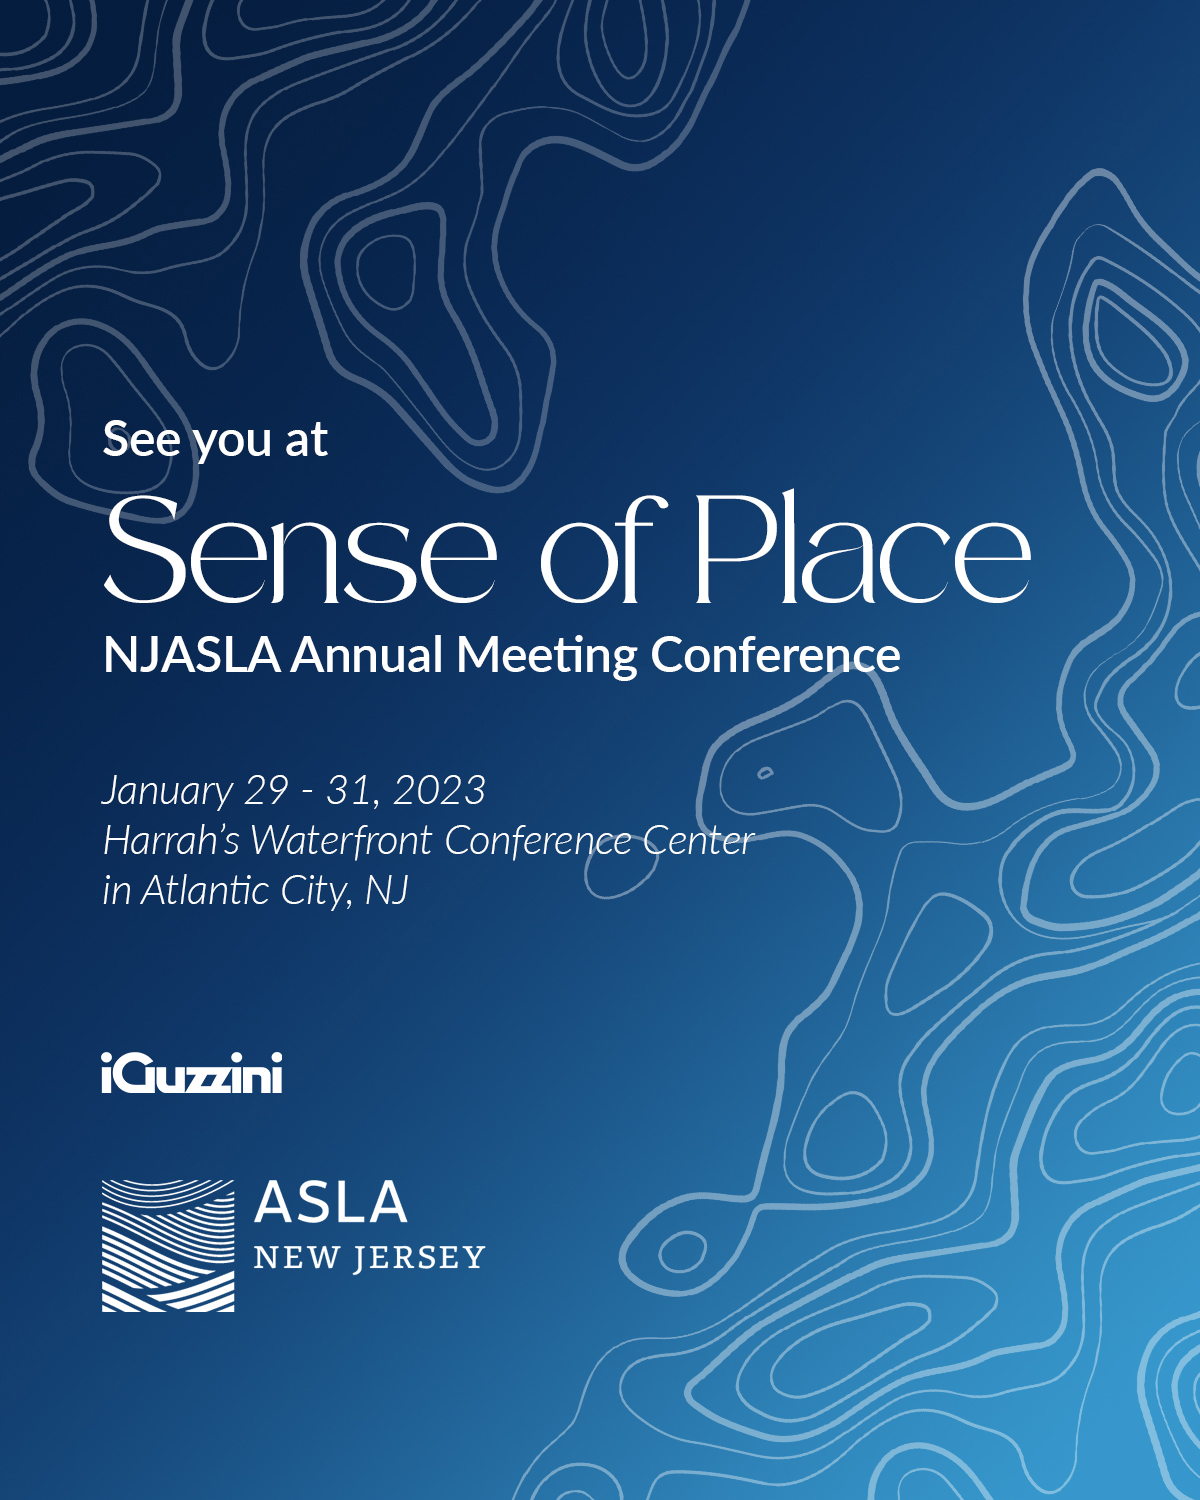 iGuzzini @ NJASLA Annual Meeting - Sense of Place